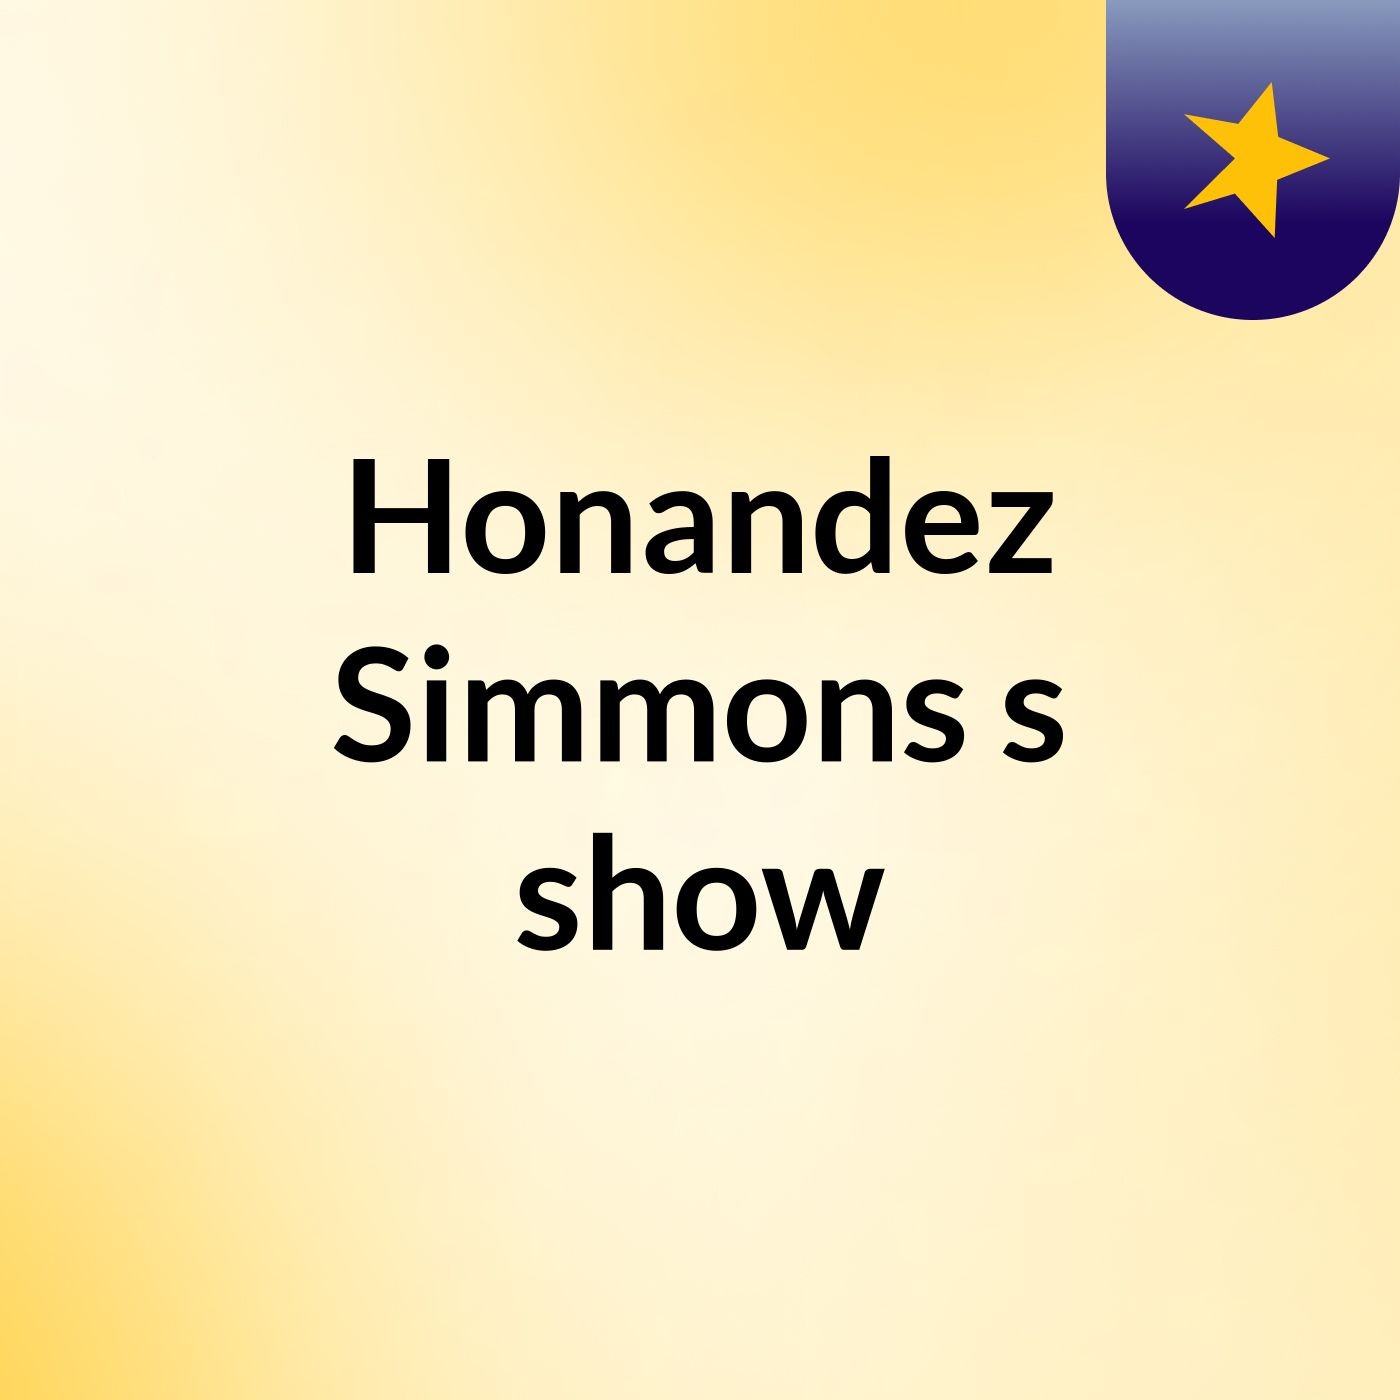 Honandez Simmons's show